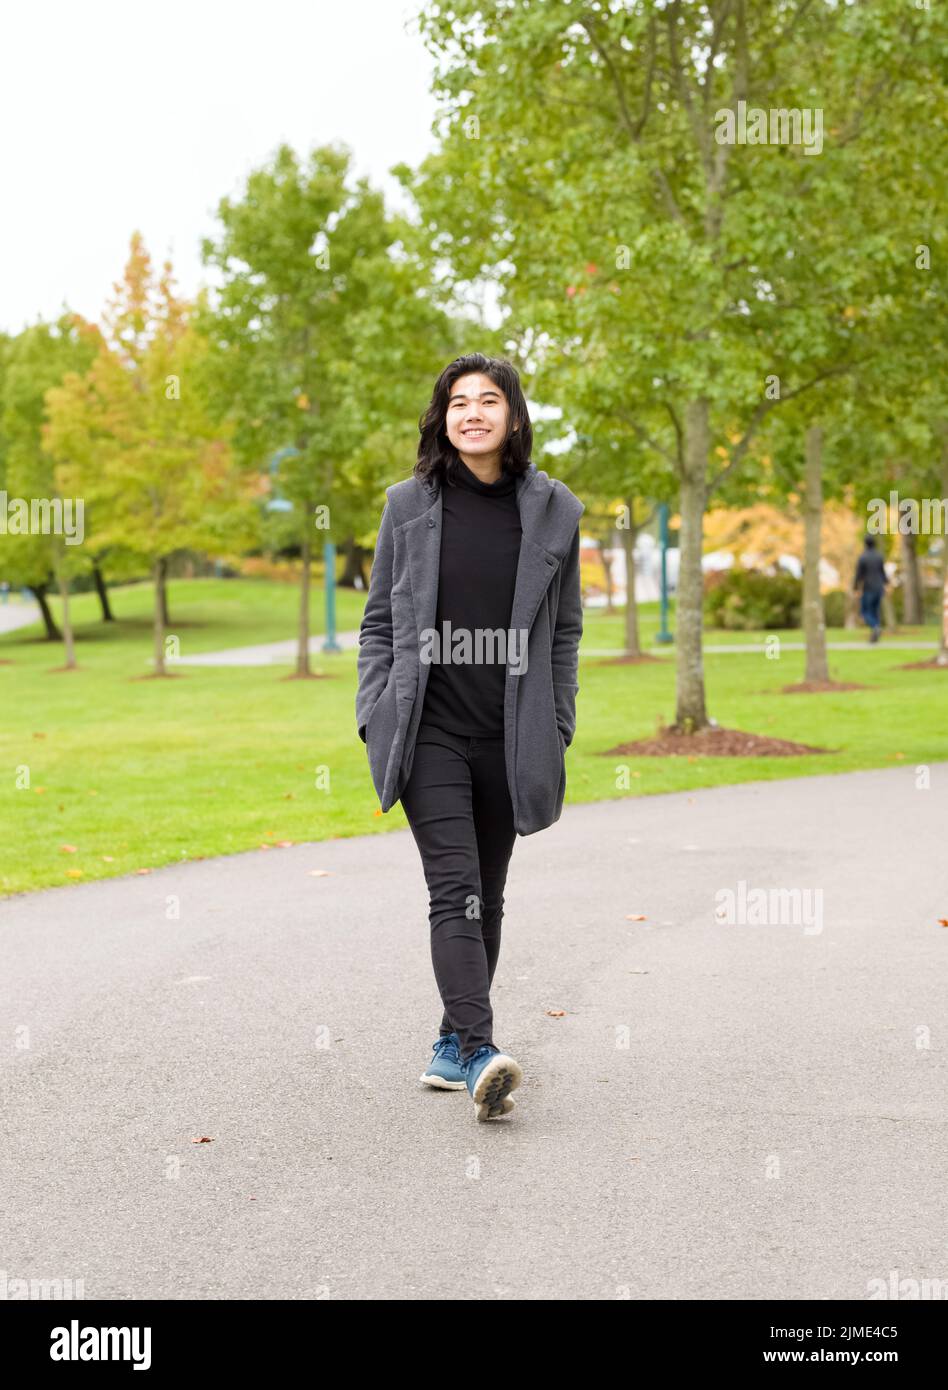 Smiling teen girl in gray jacket walking along path through park Stock Photo